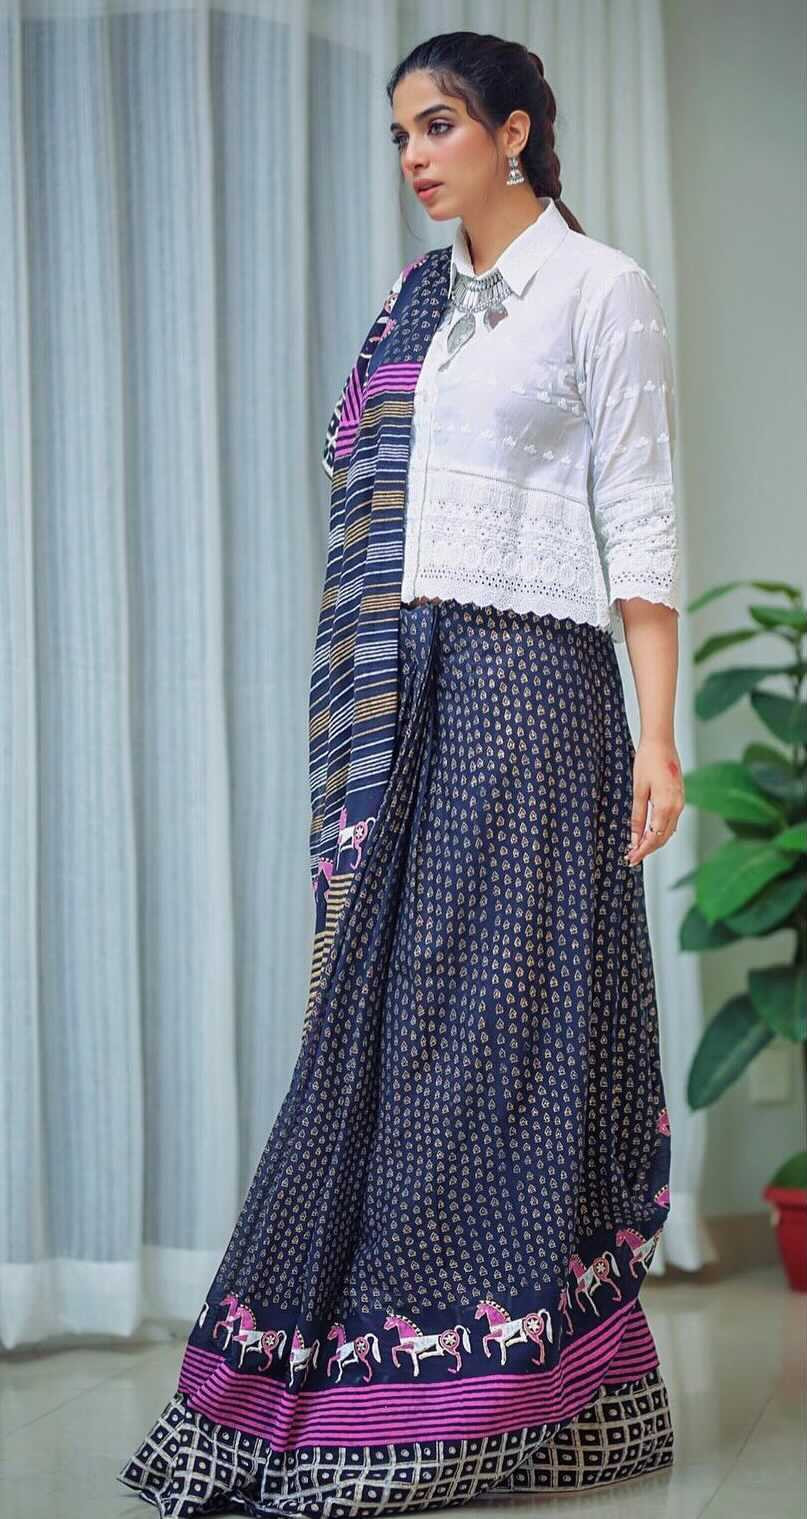 Naimal to Sonya: 4 ways to drape the cotton saree